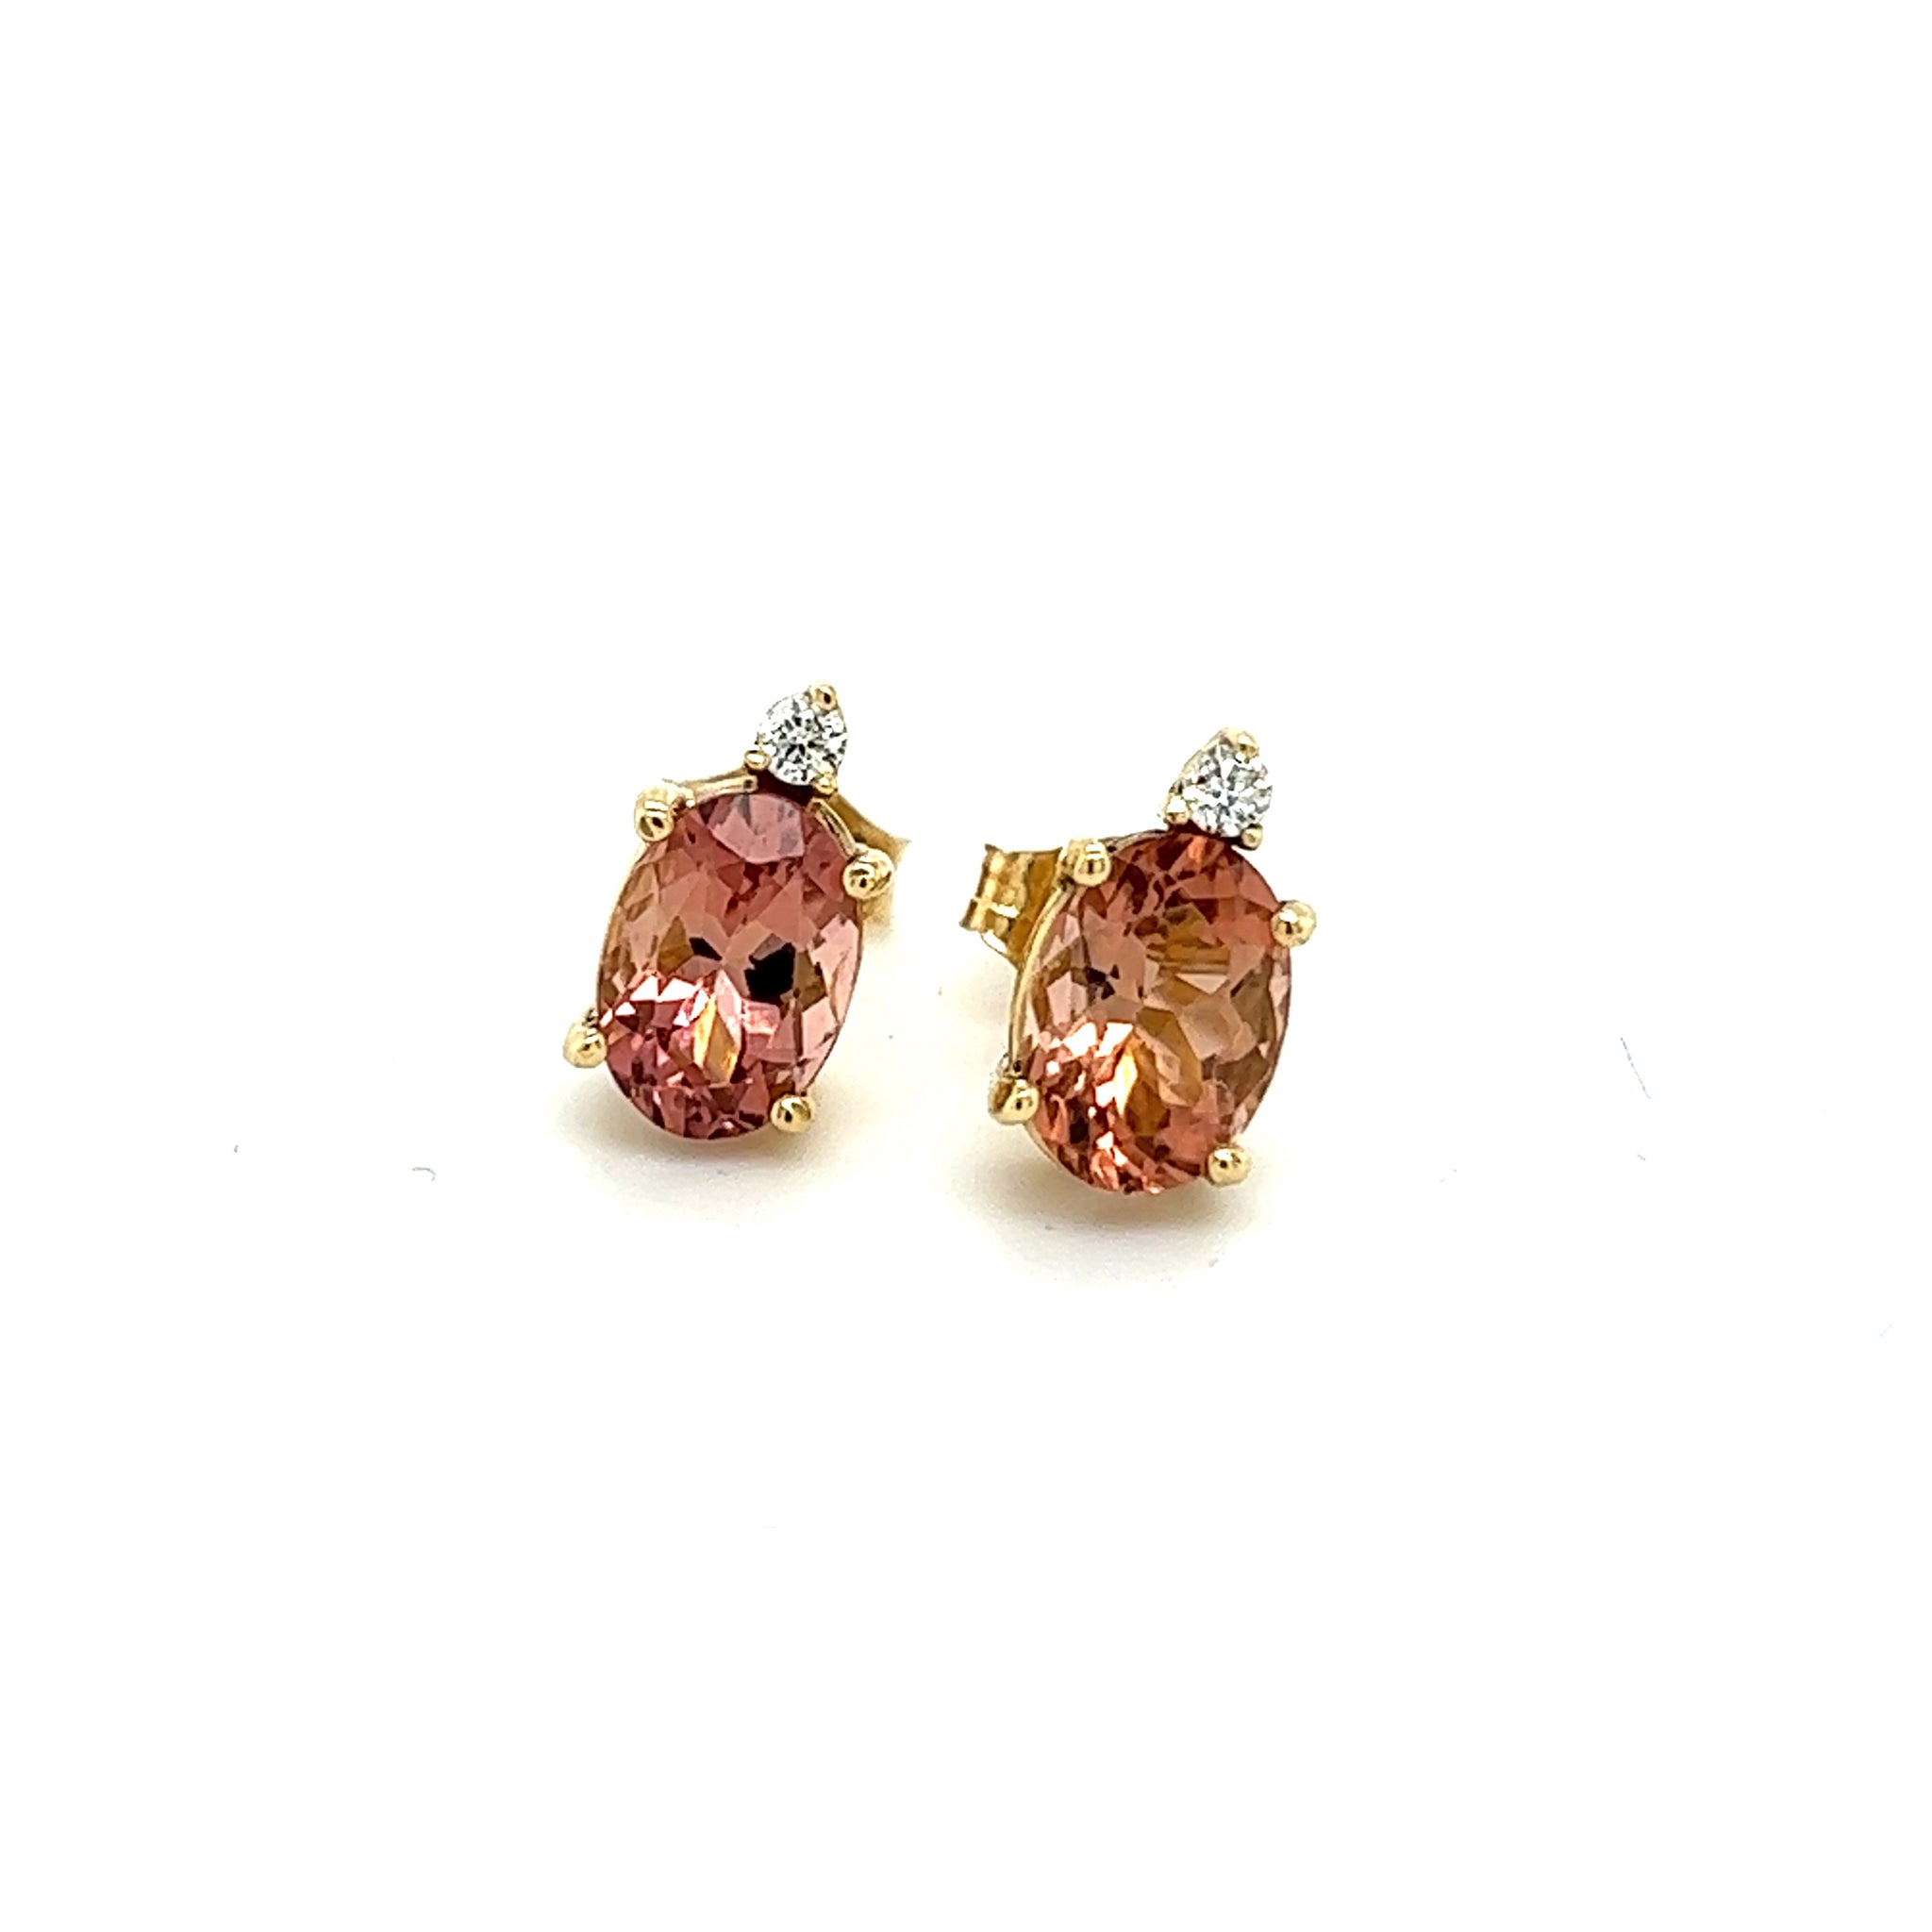 Natural Tourmaline Diamond Stud Earrings 14k Y Gold 1.76 TCW Certified $1,690 121431